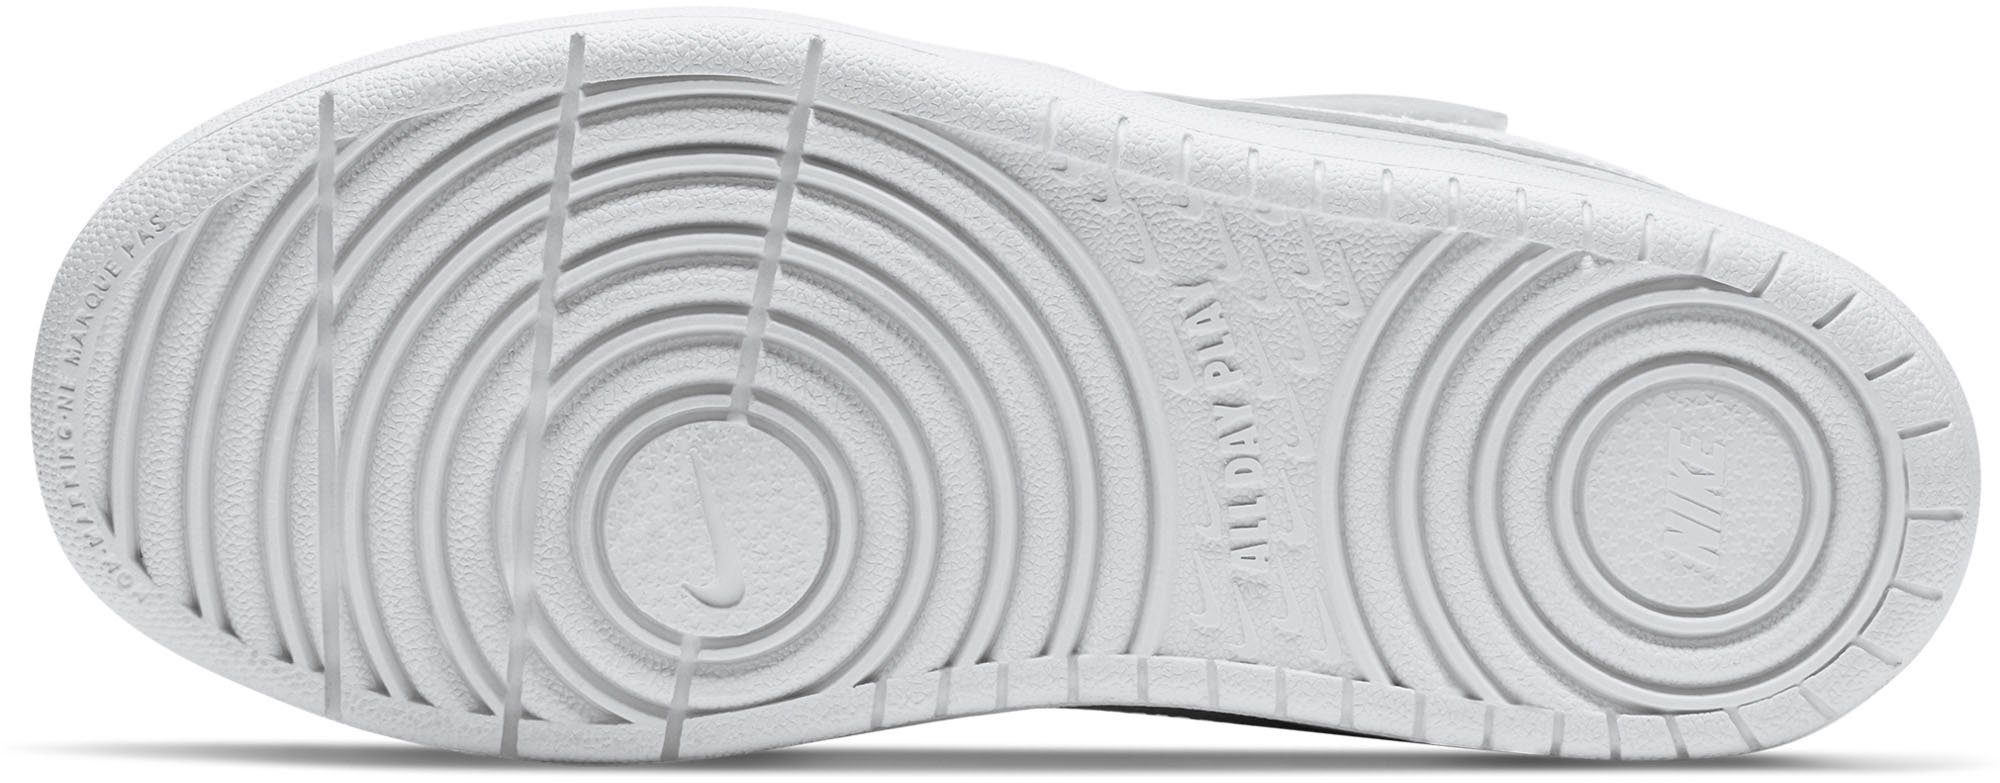 2 LOW des Sneaker 1 Sportswear Air den BOROUGH auf COURT Force Design Spuren Nike